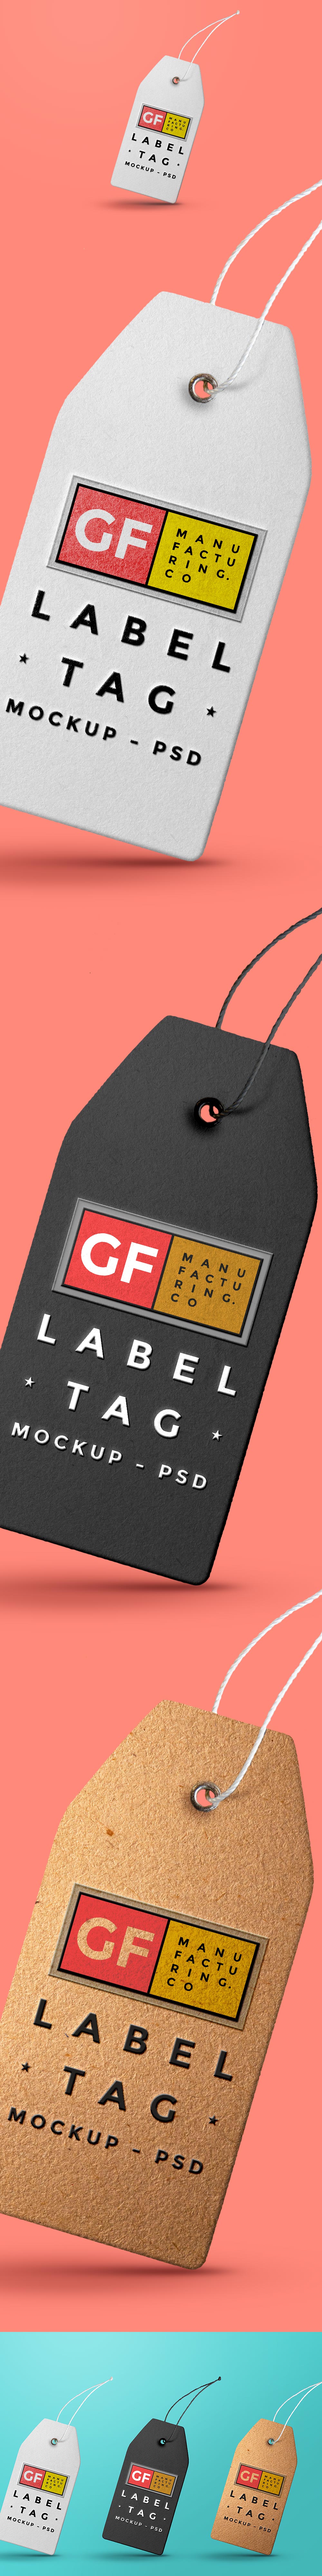 Free Clothing Label Tag Mockup PSD